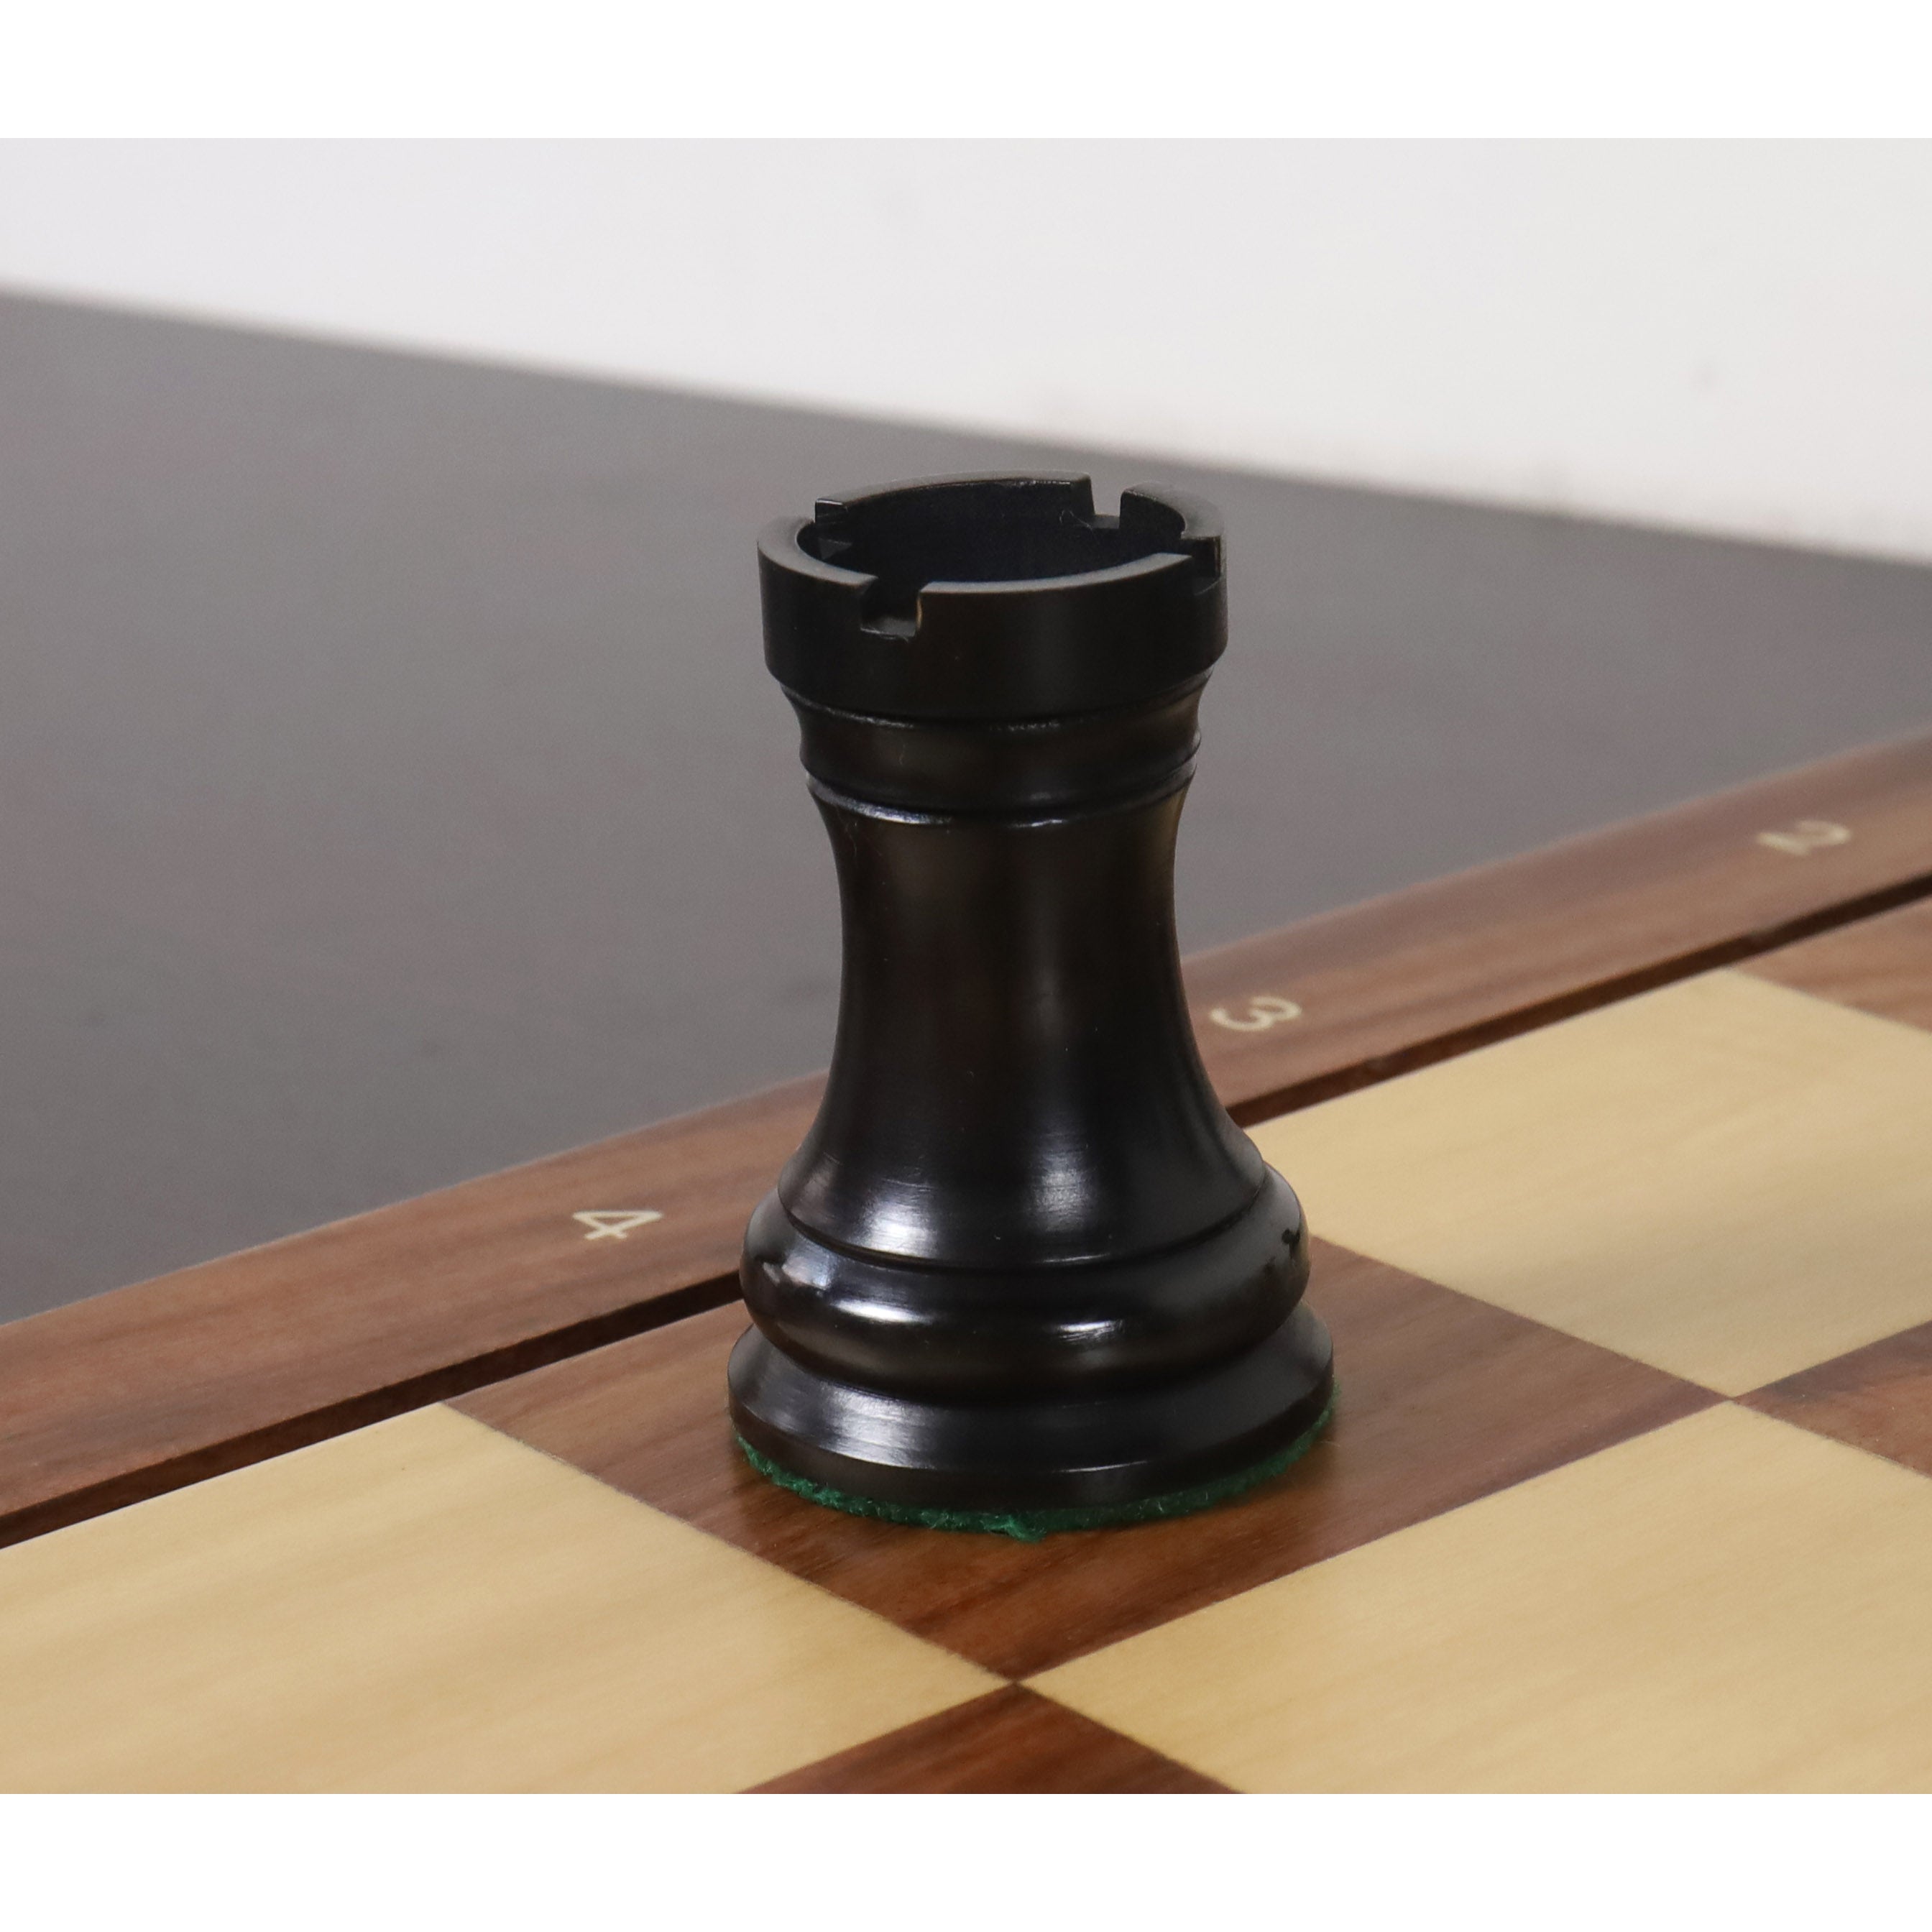 Slightly Imperfect 1933 Botvinnik Flohr-I Soviet Chess Set - Chess Pieces Only -Ebonised Boxwood- 3.6" King